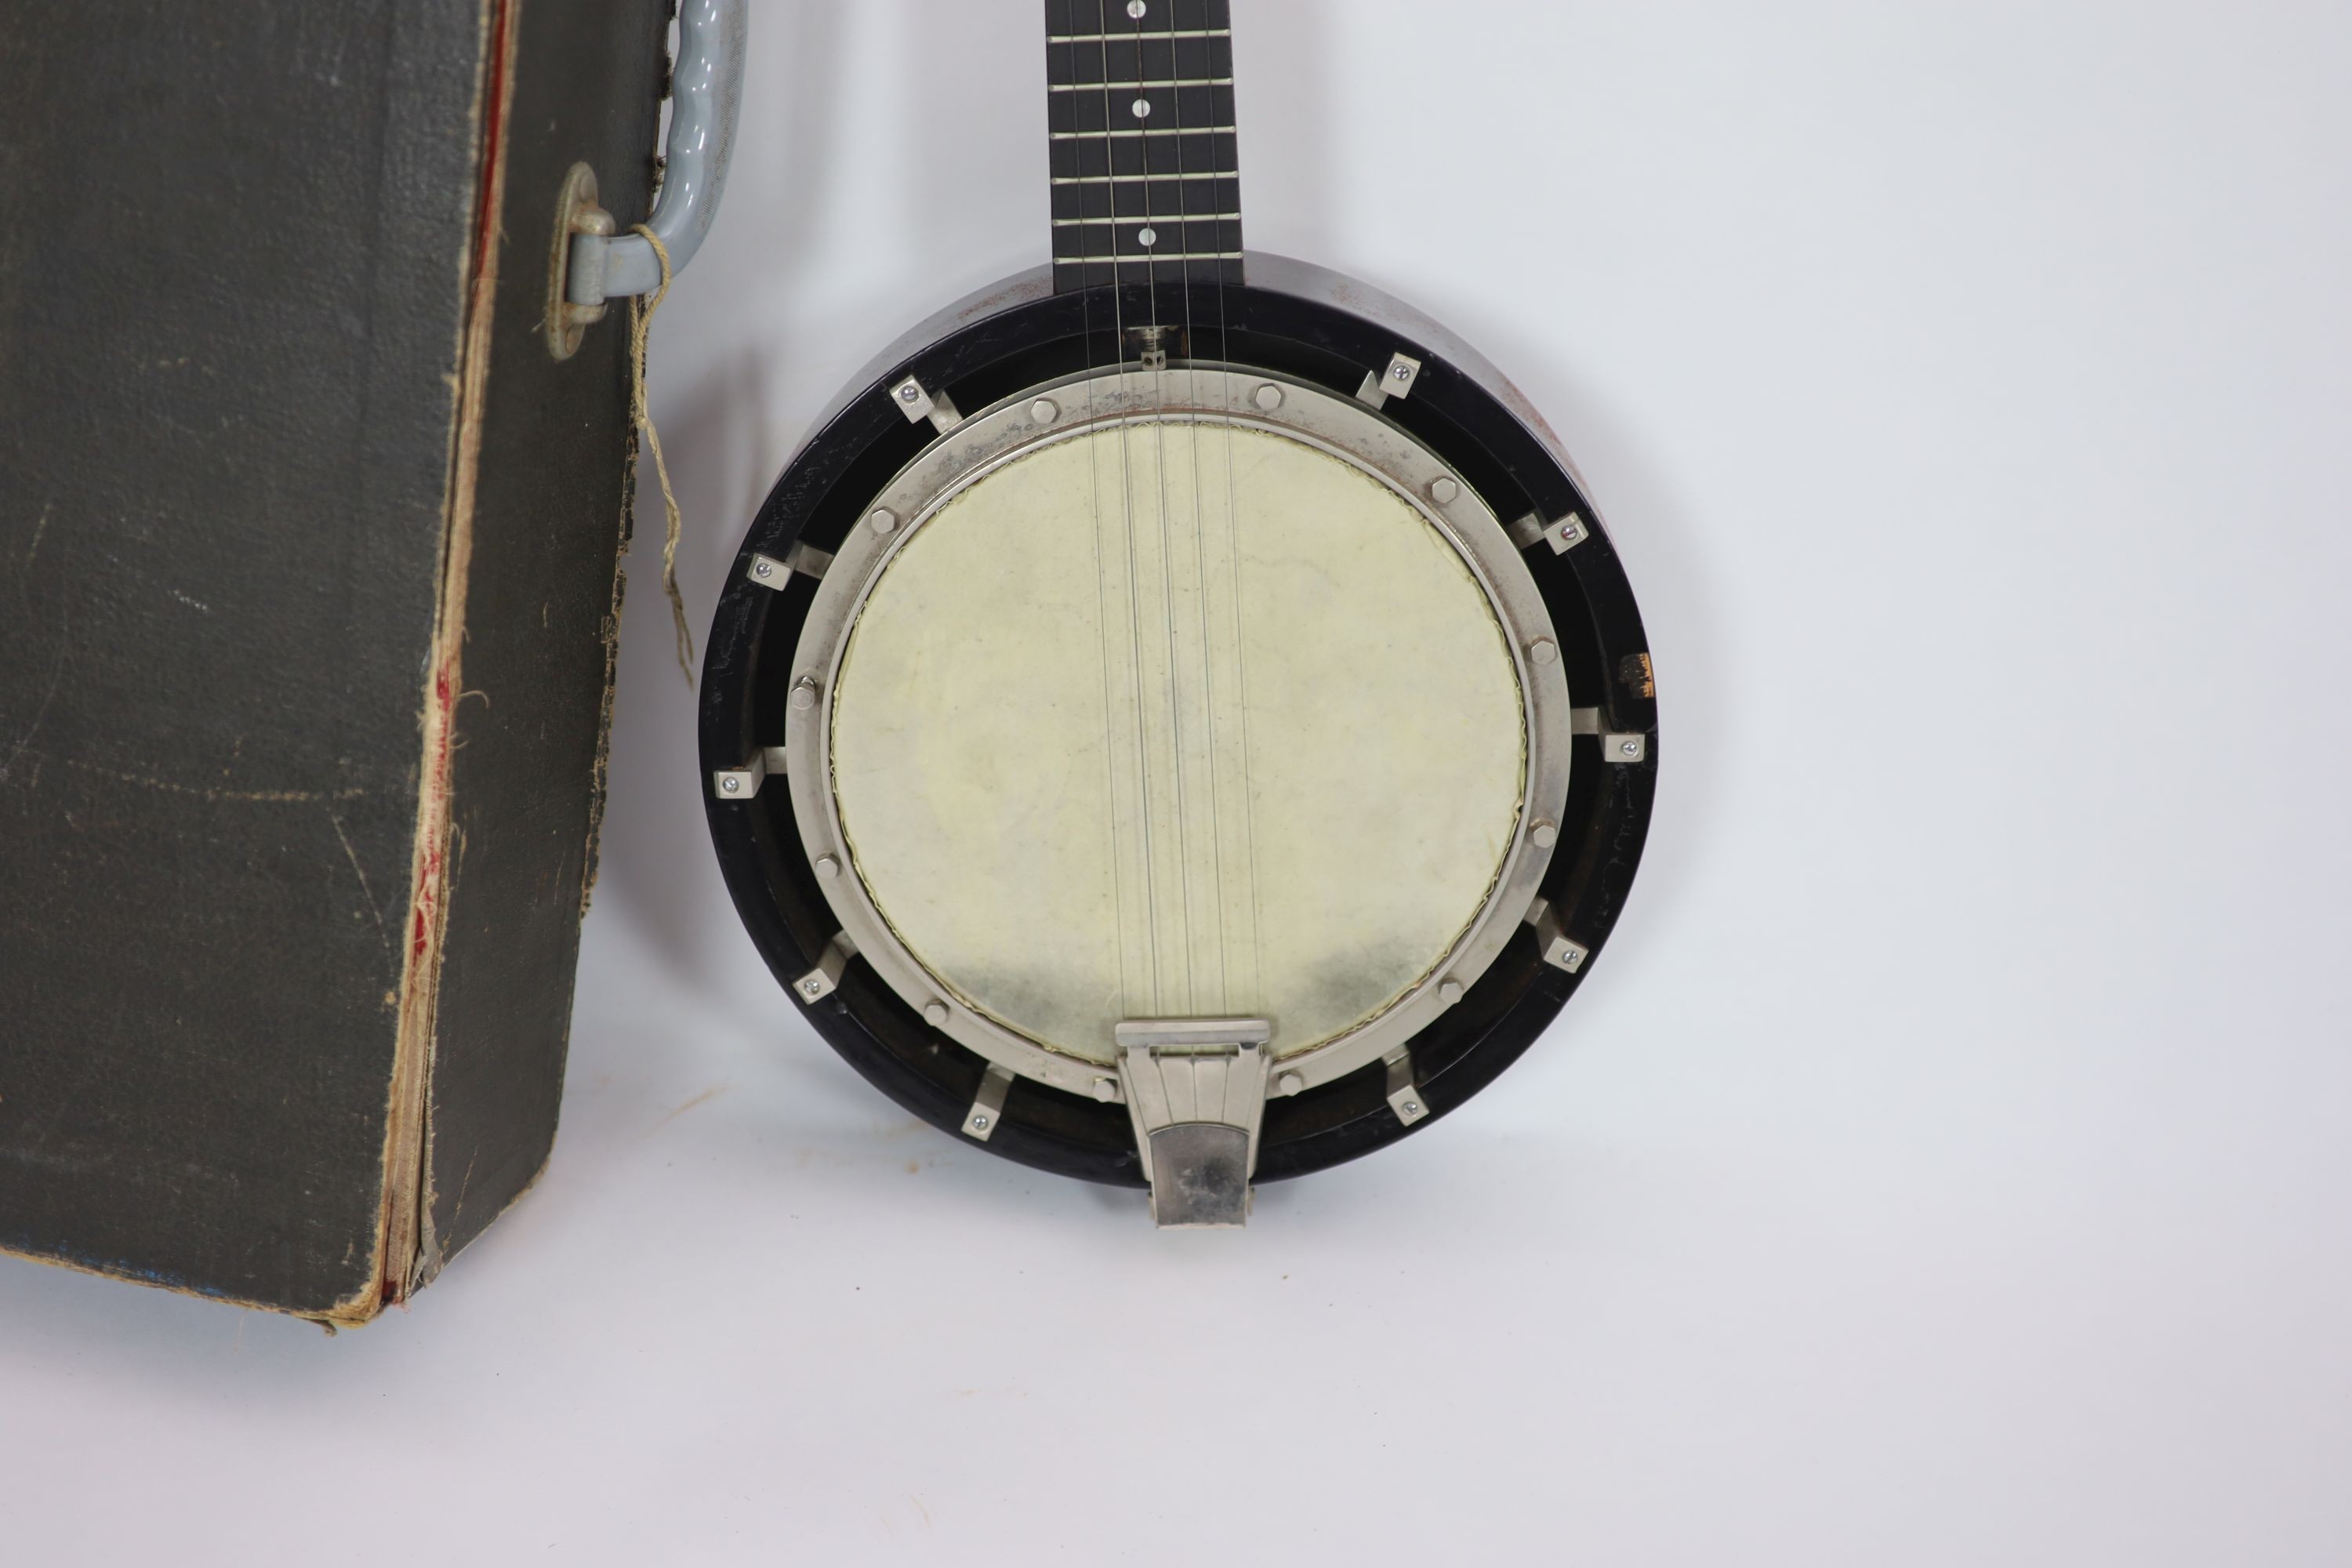 A Cammeyer banjo, length 93cm